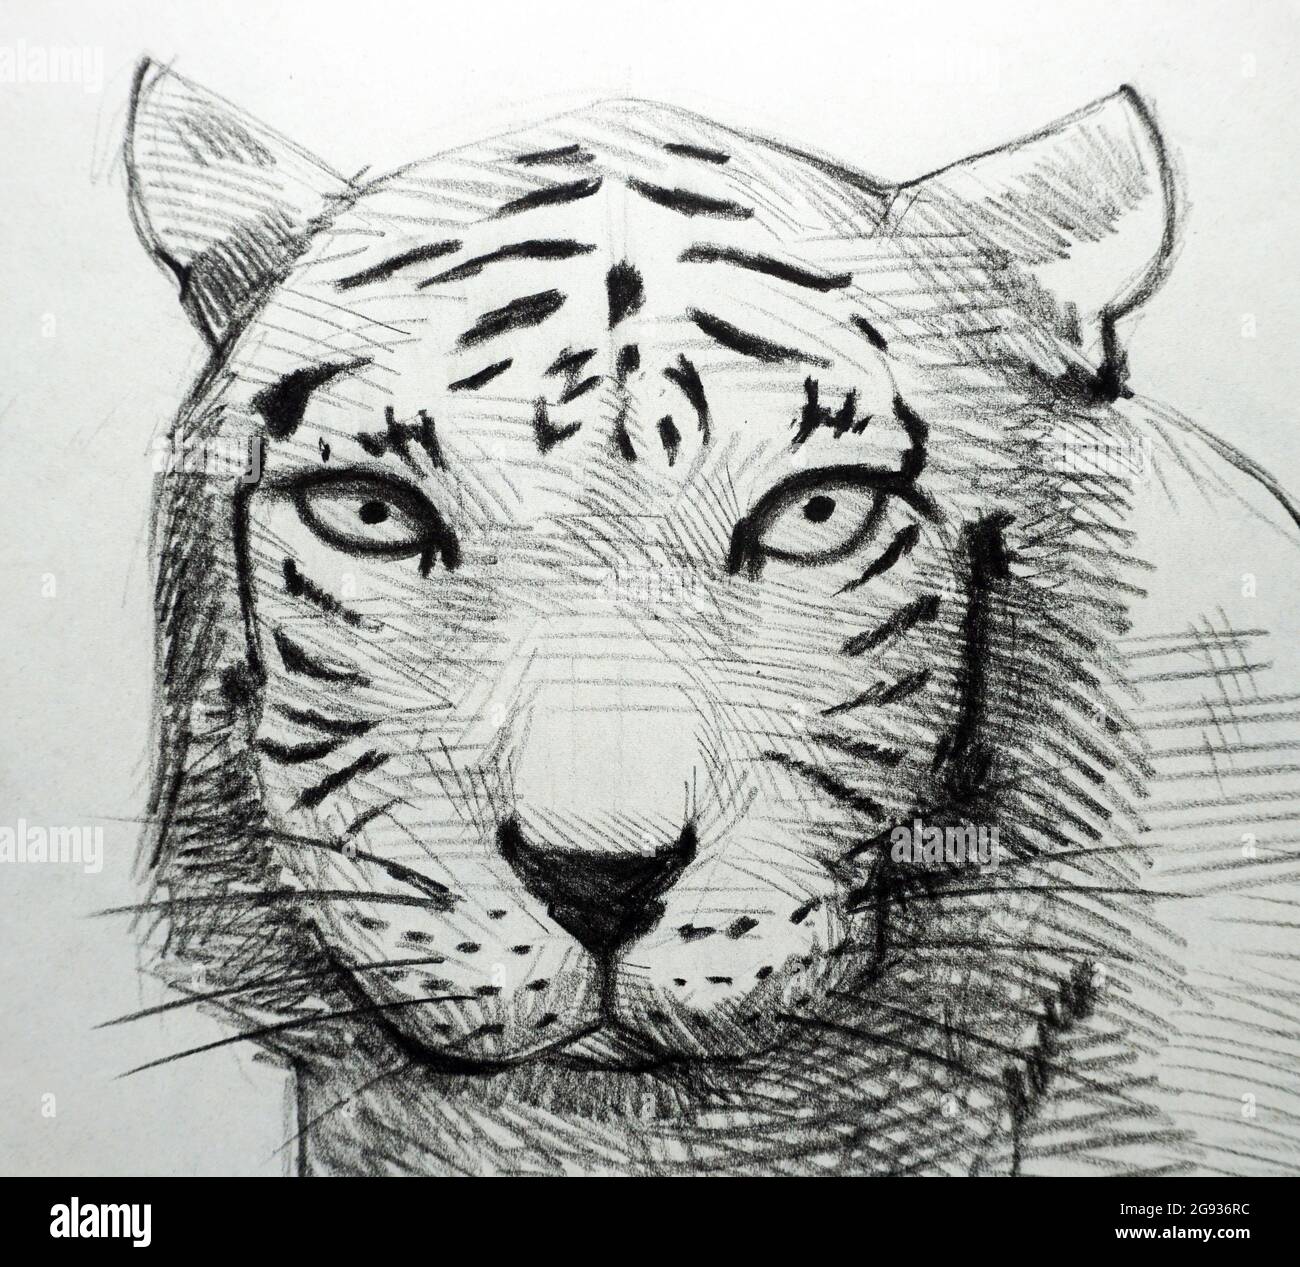 Stock Art Drawing of a Bengal Tiger